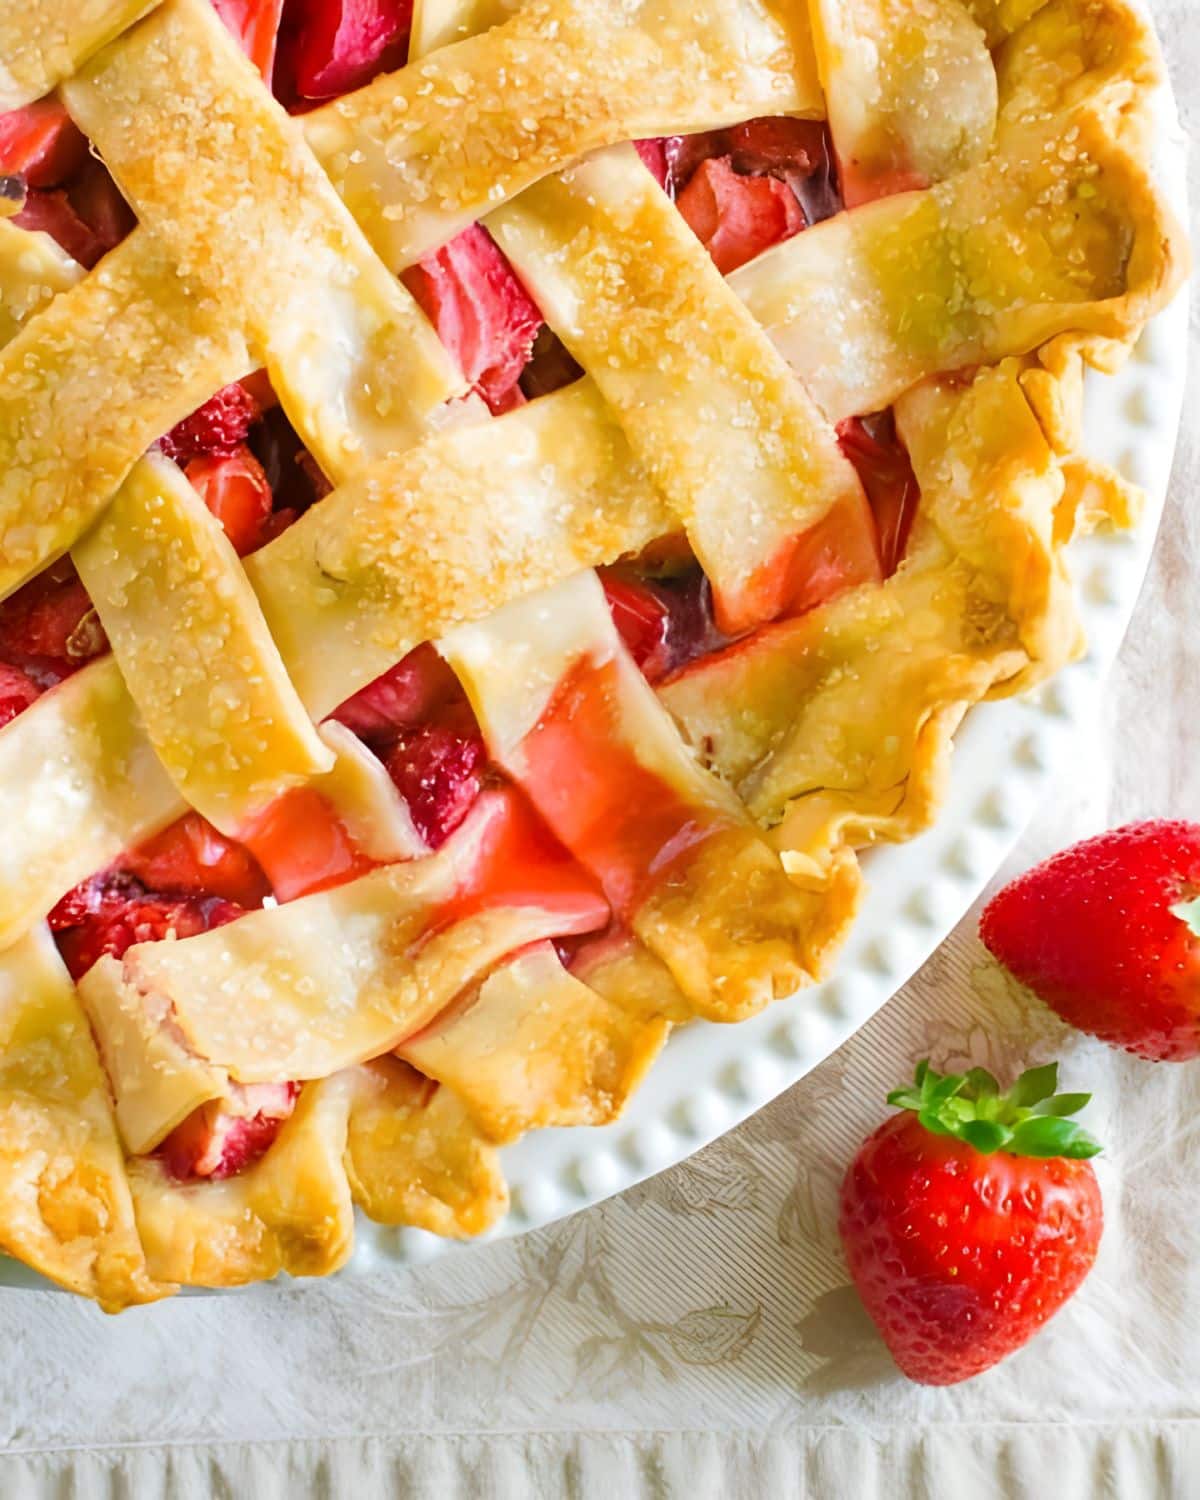 Strawberry rhubarb pie with lattice crust.